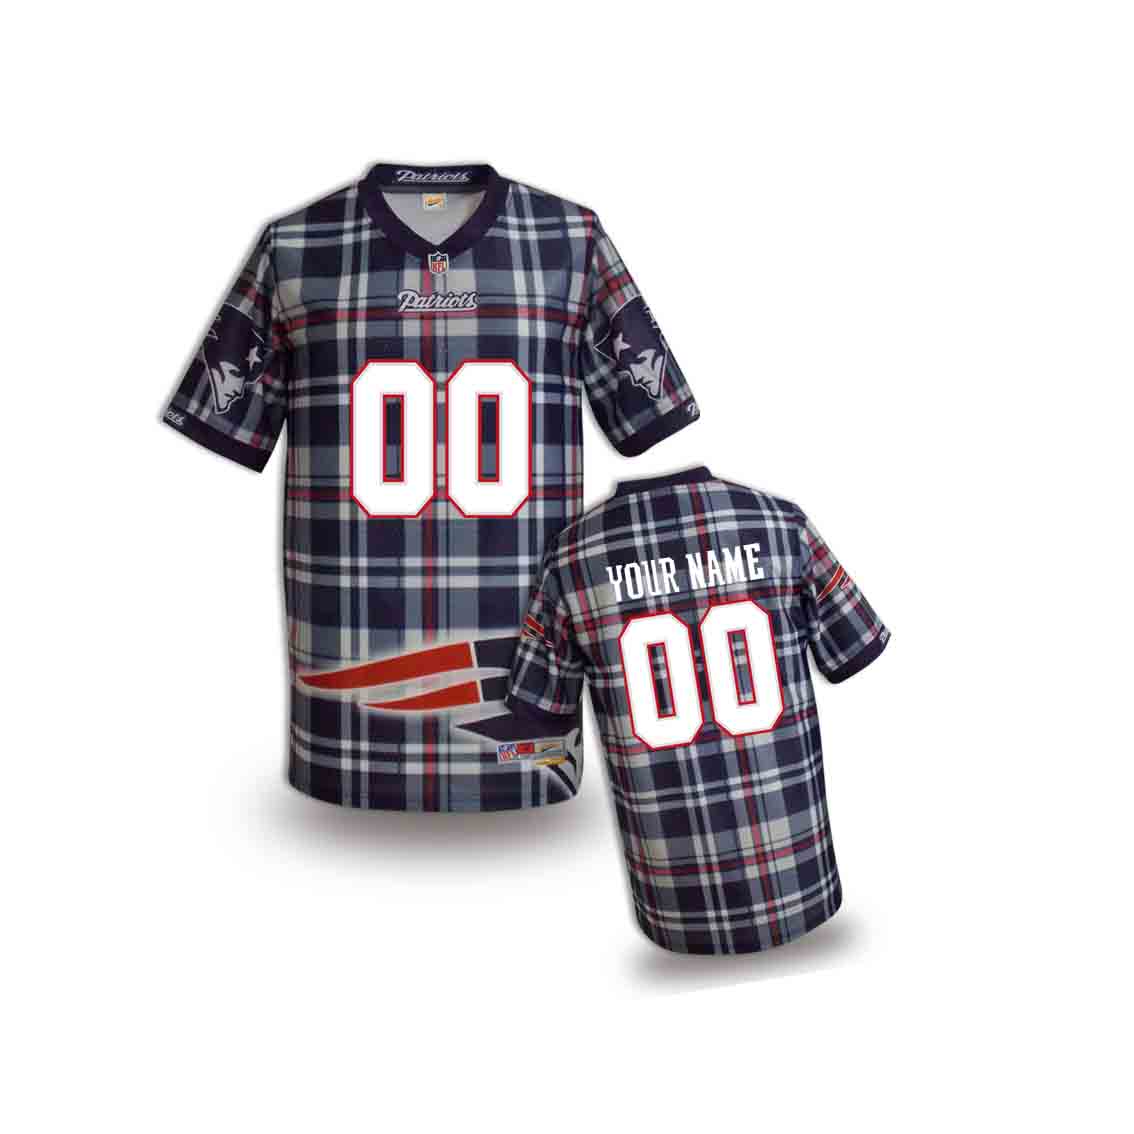 Nike Patriots Customized Fashion Stitched Youth Jerseys01 - Click Image to Close